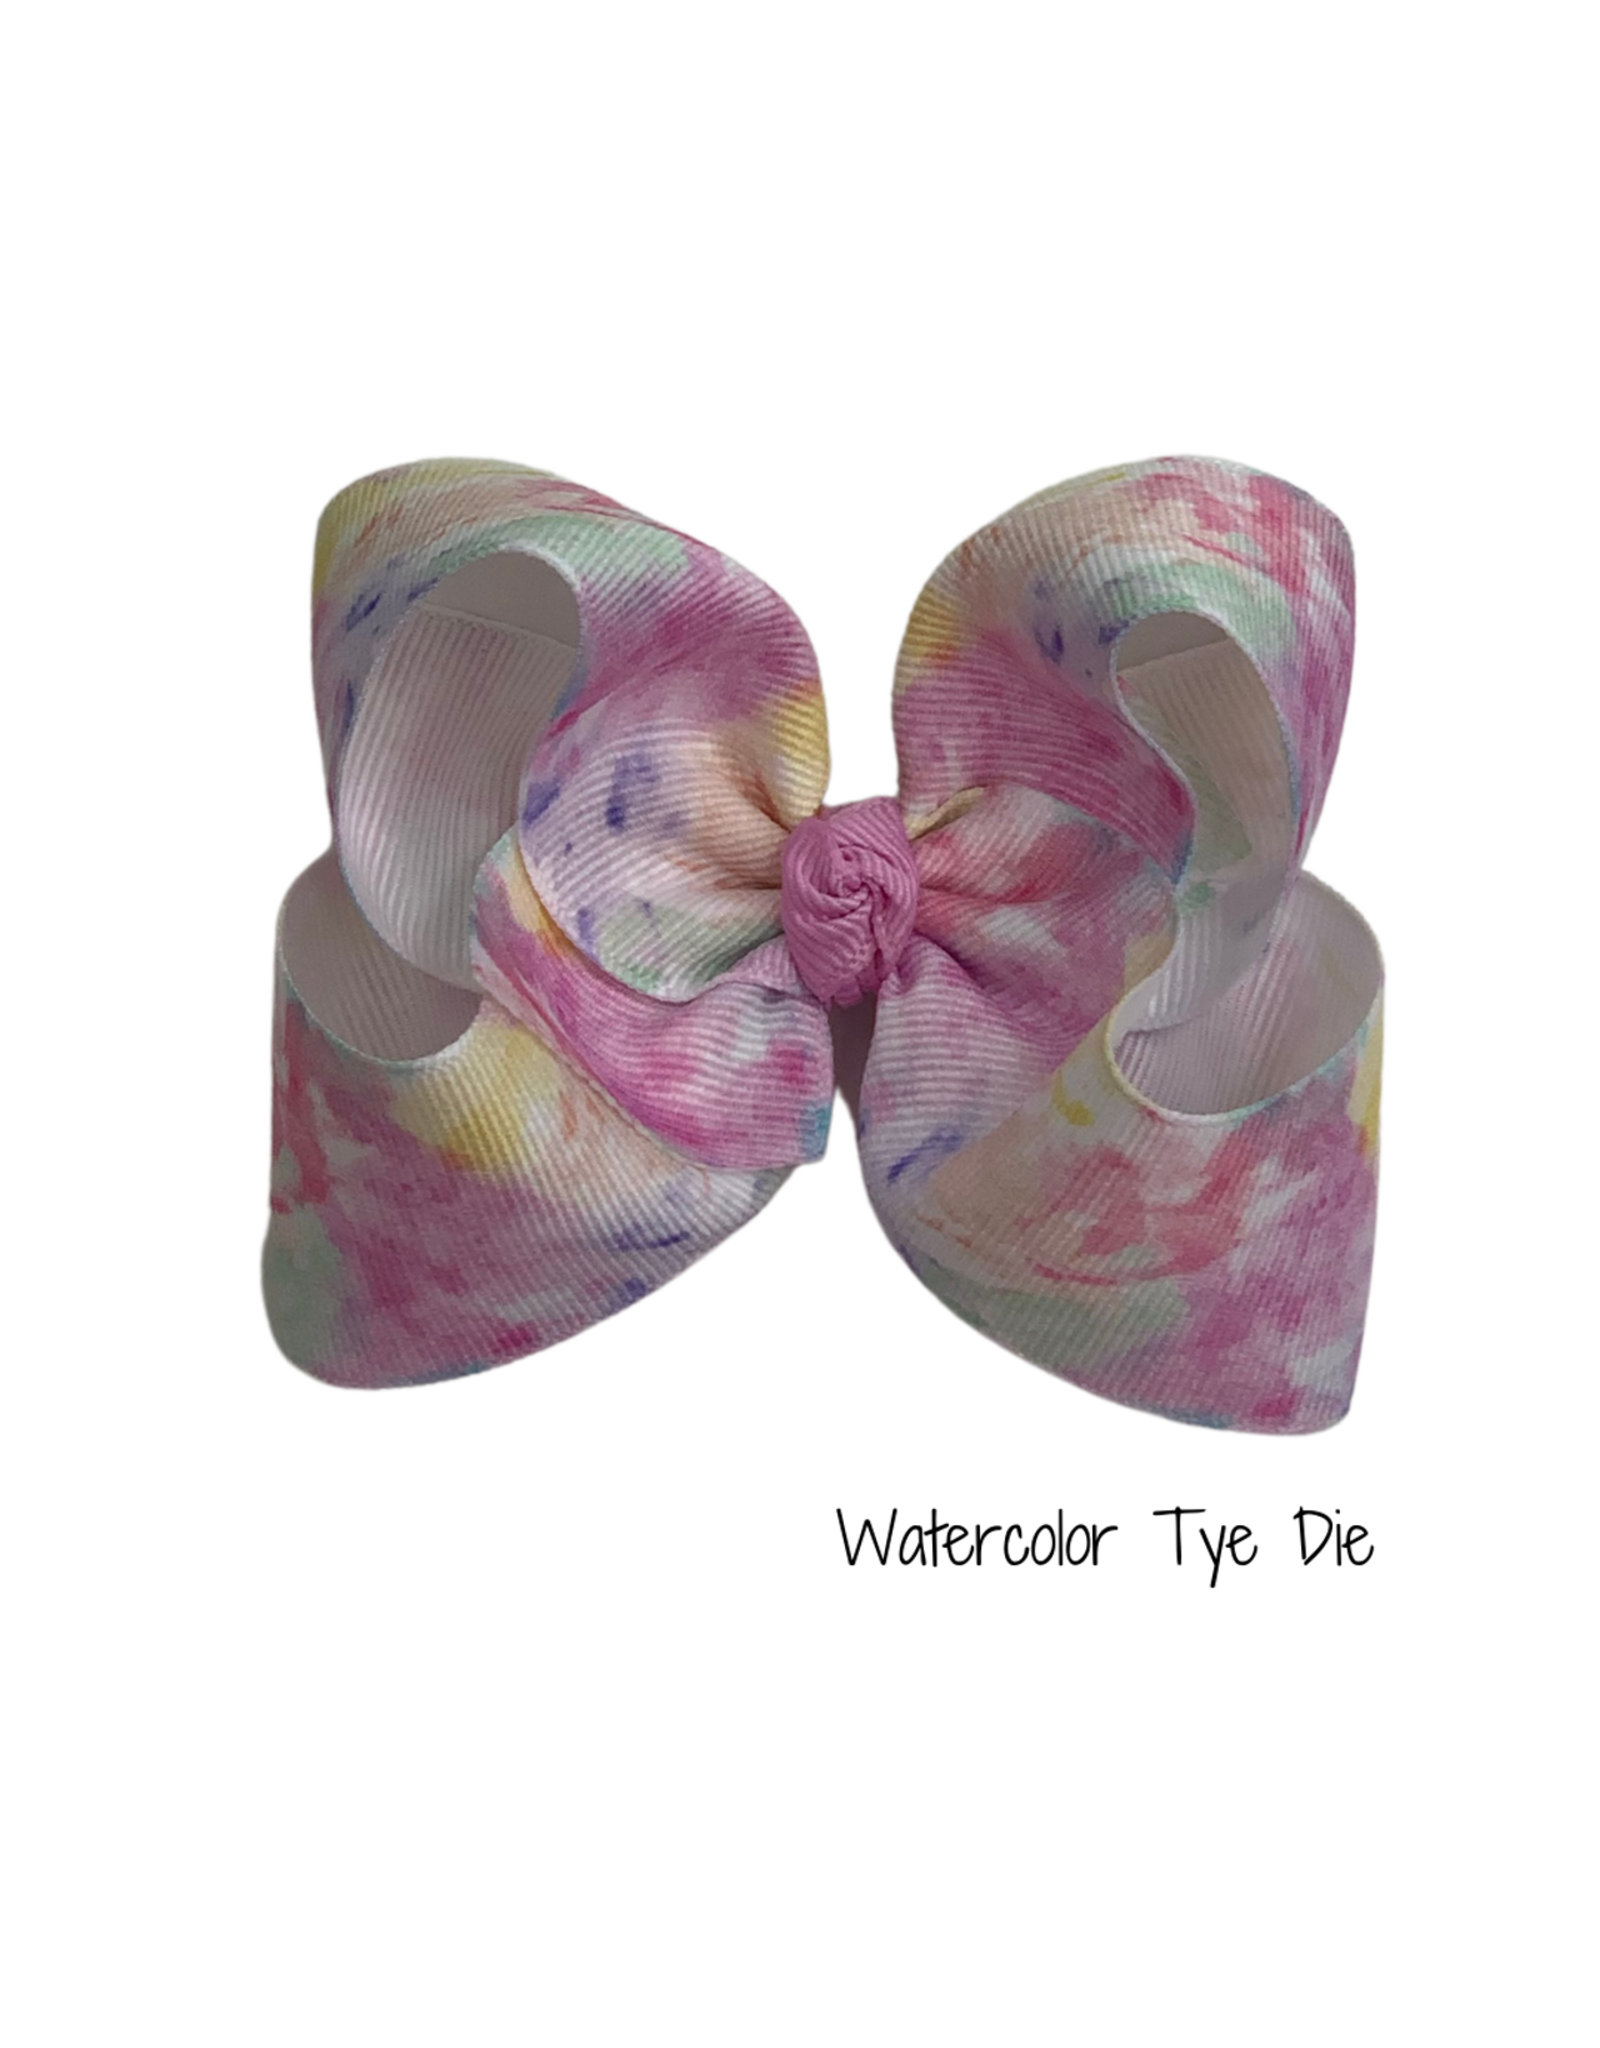 One Stop- Watercolor Tye Die Large Knot Bow